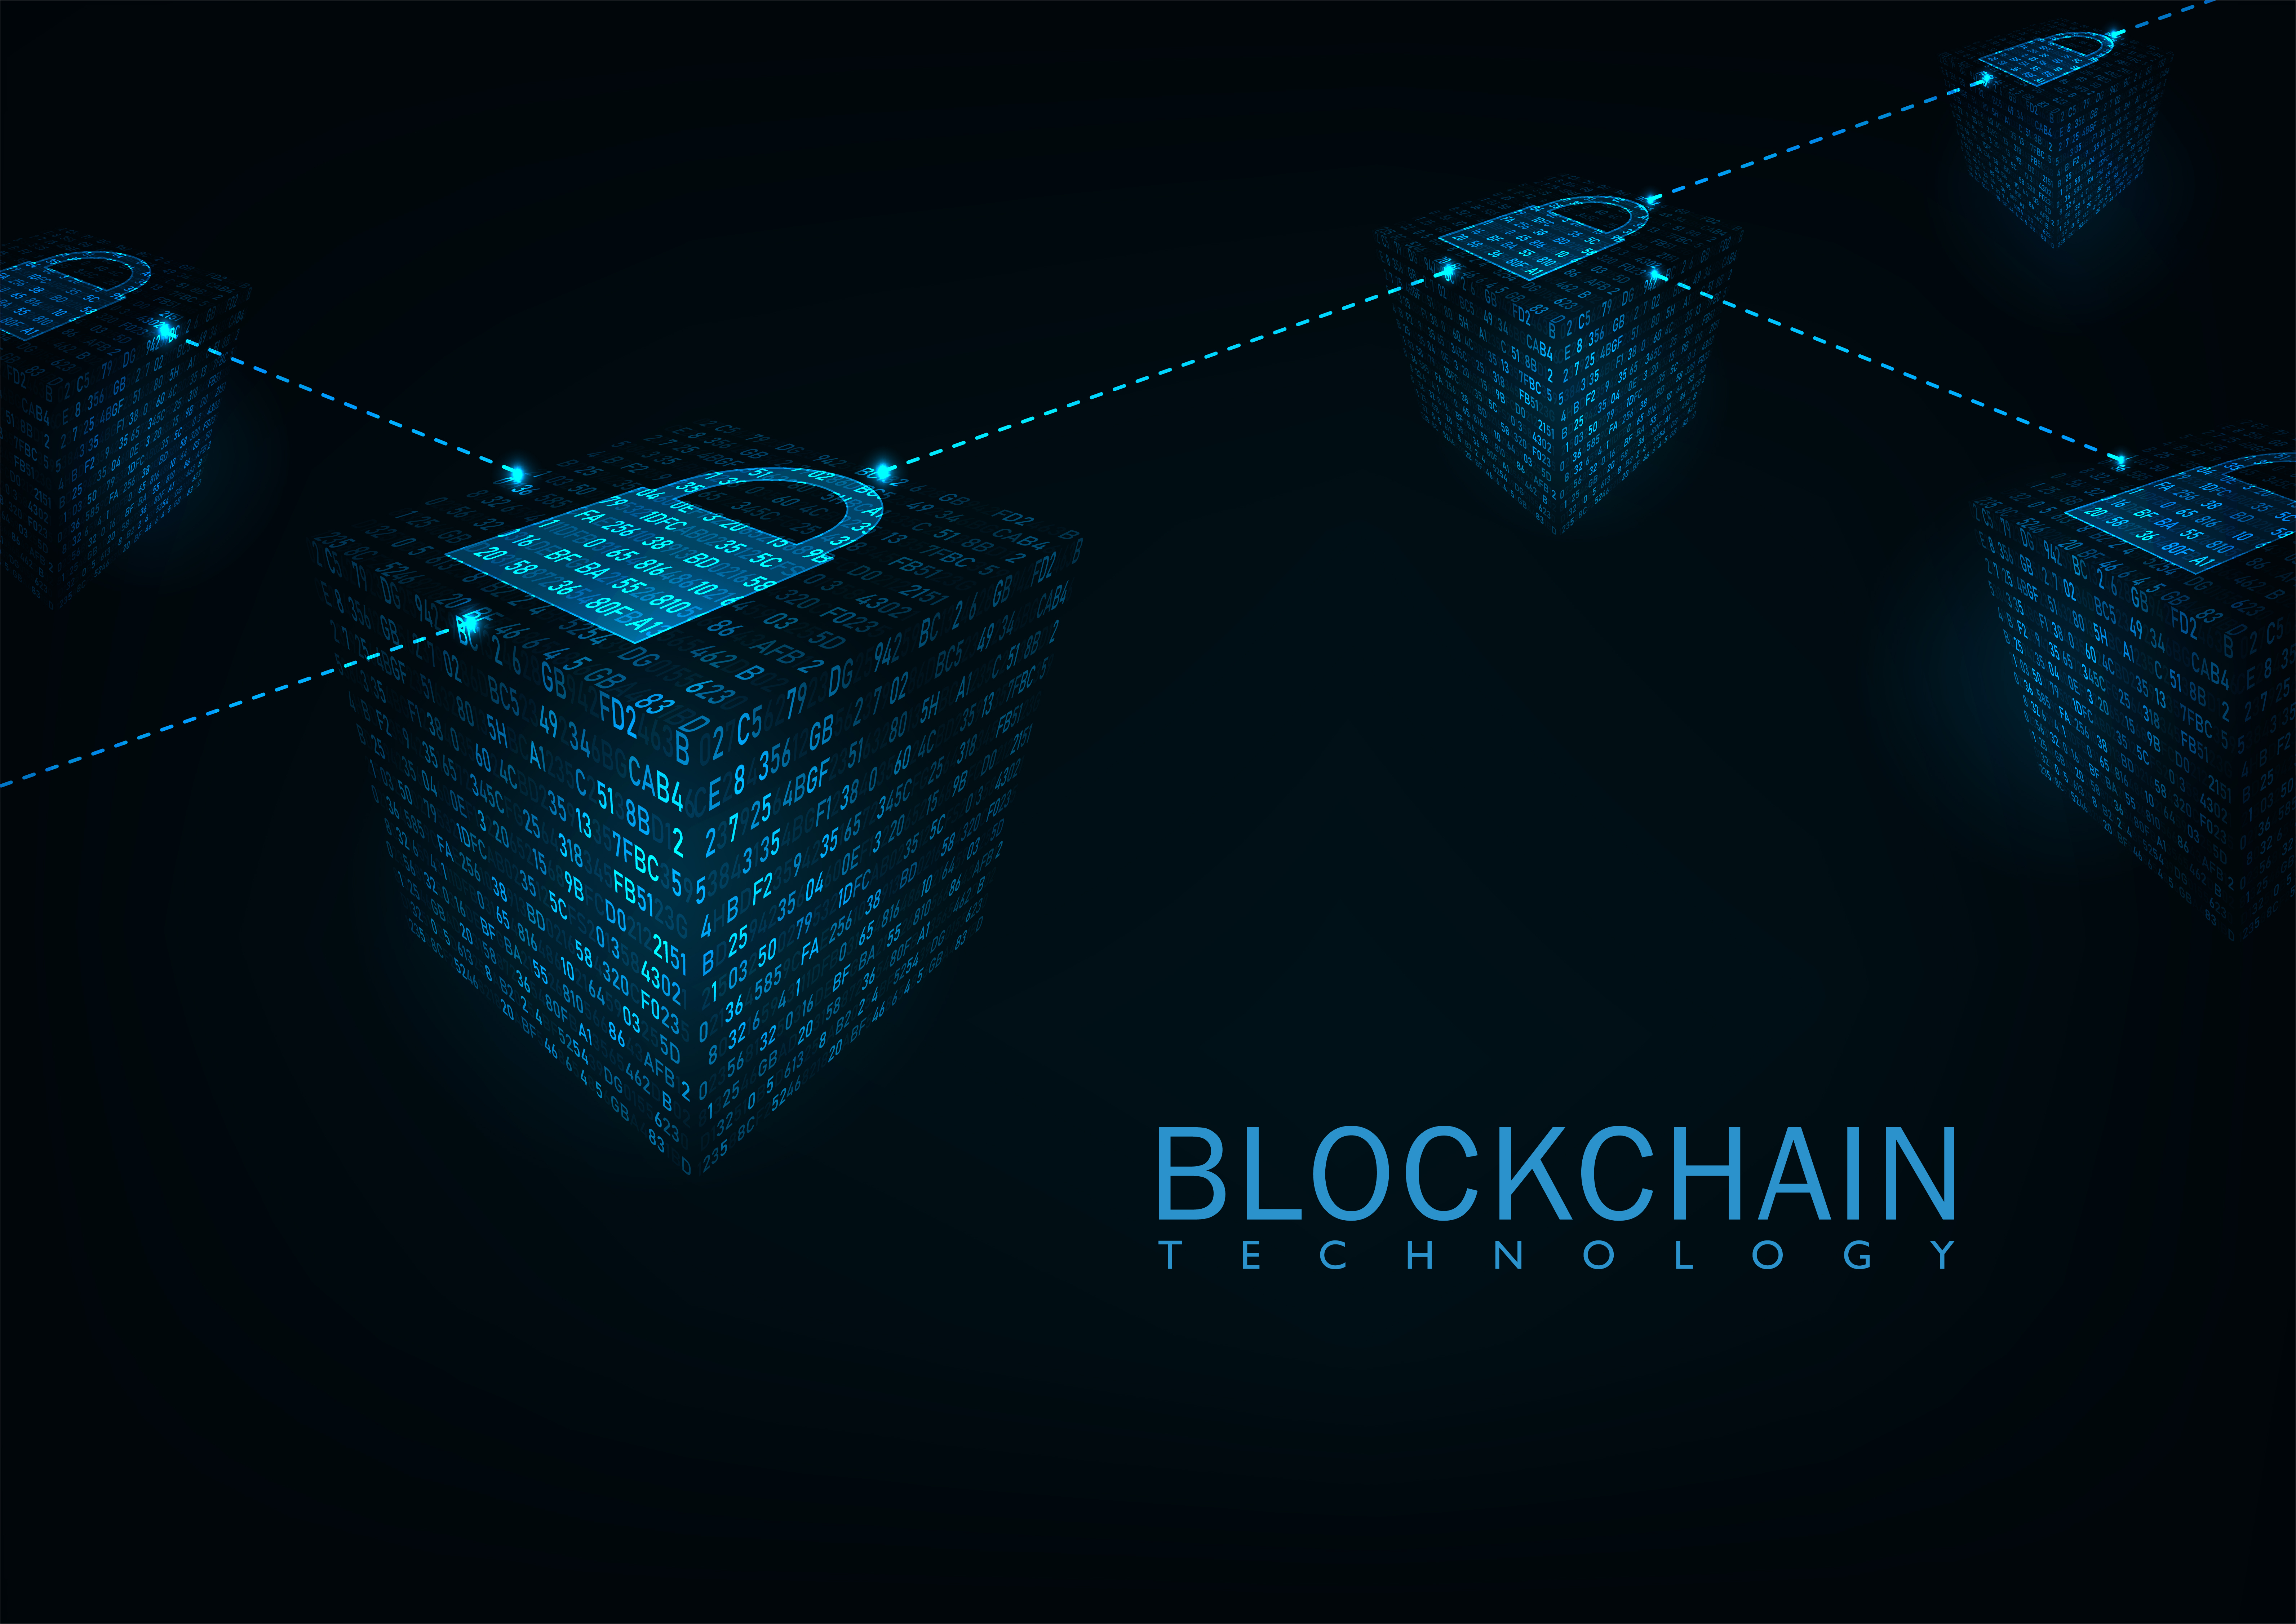 Blockchain Technology Explained